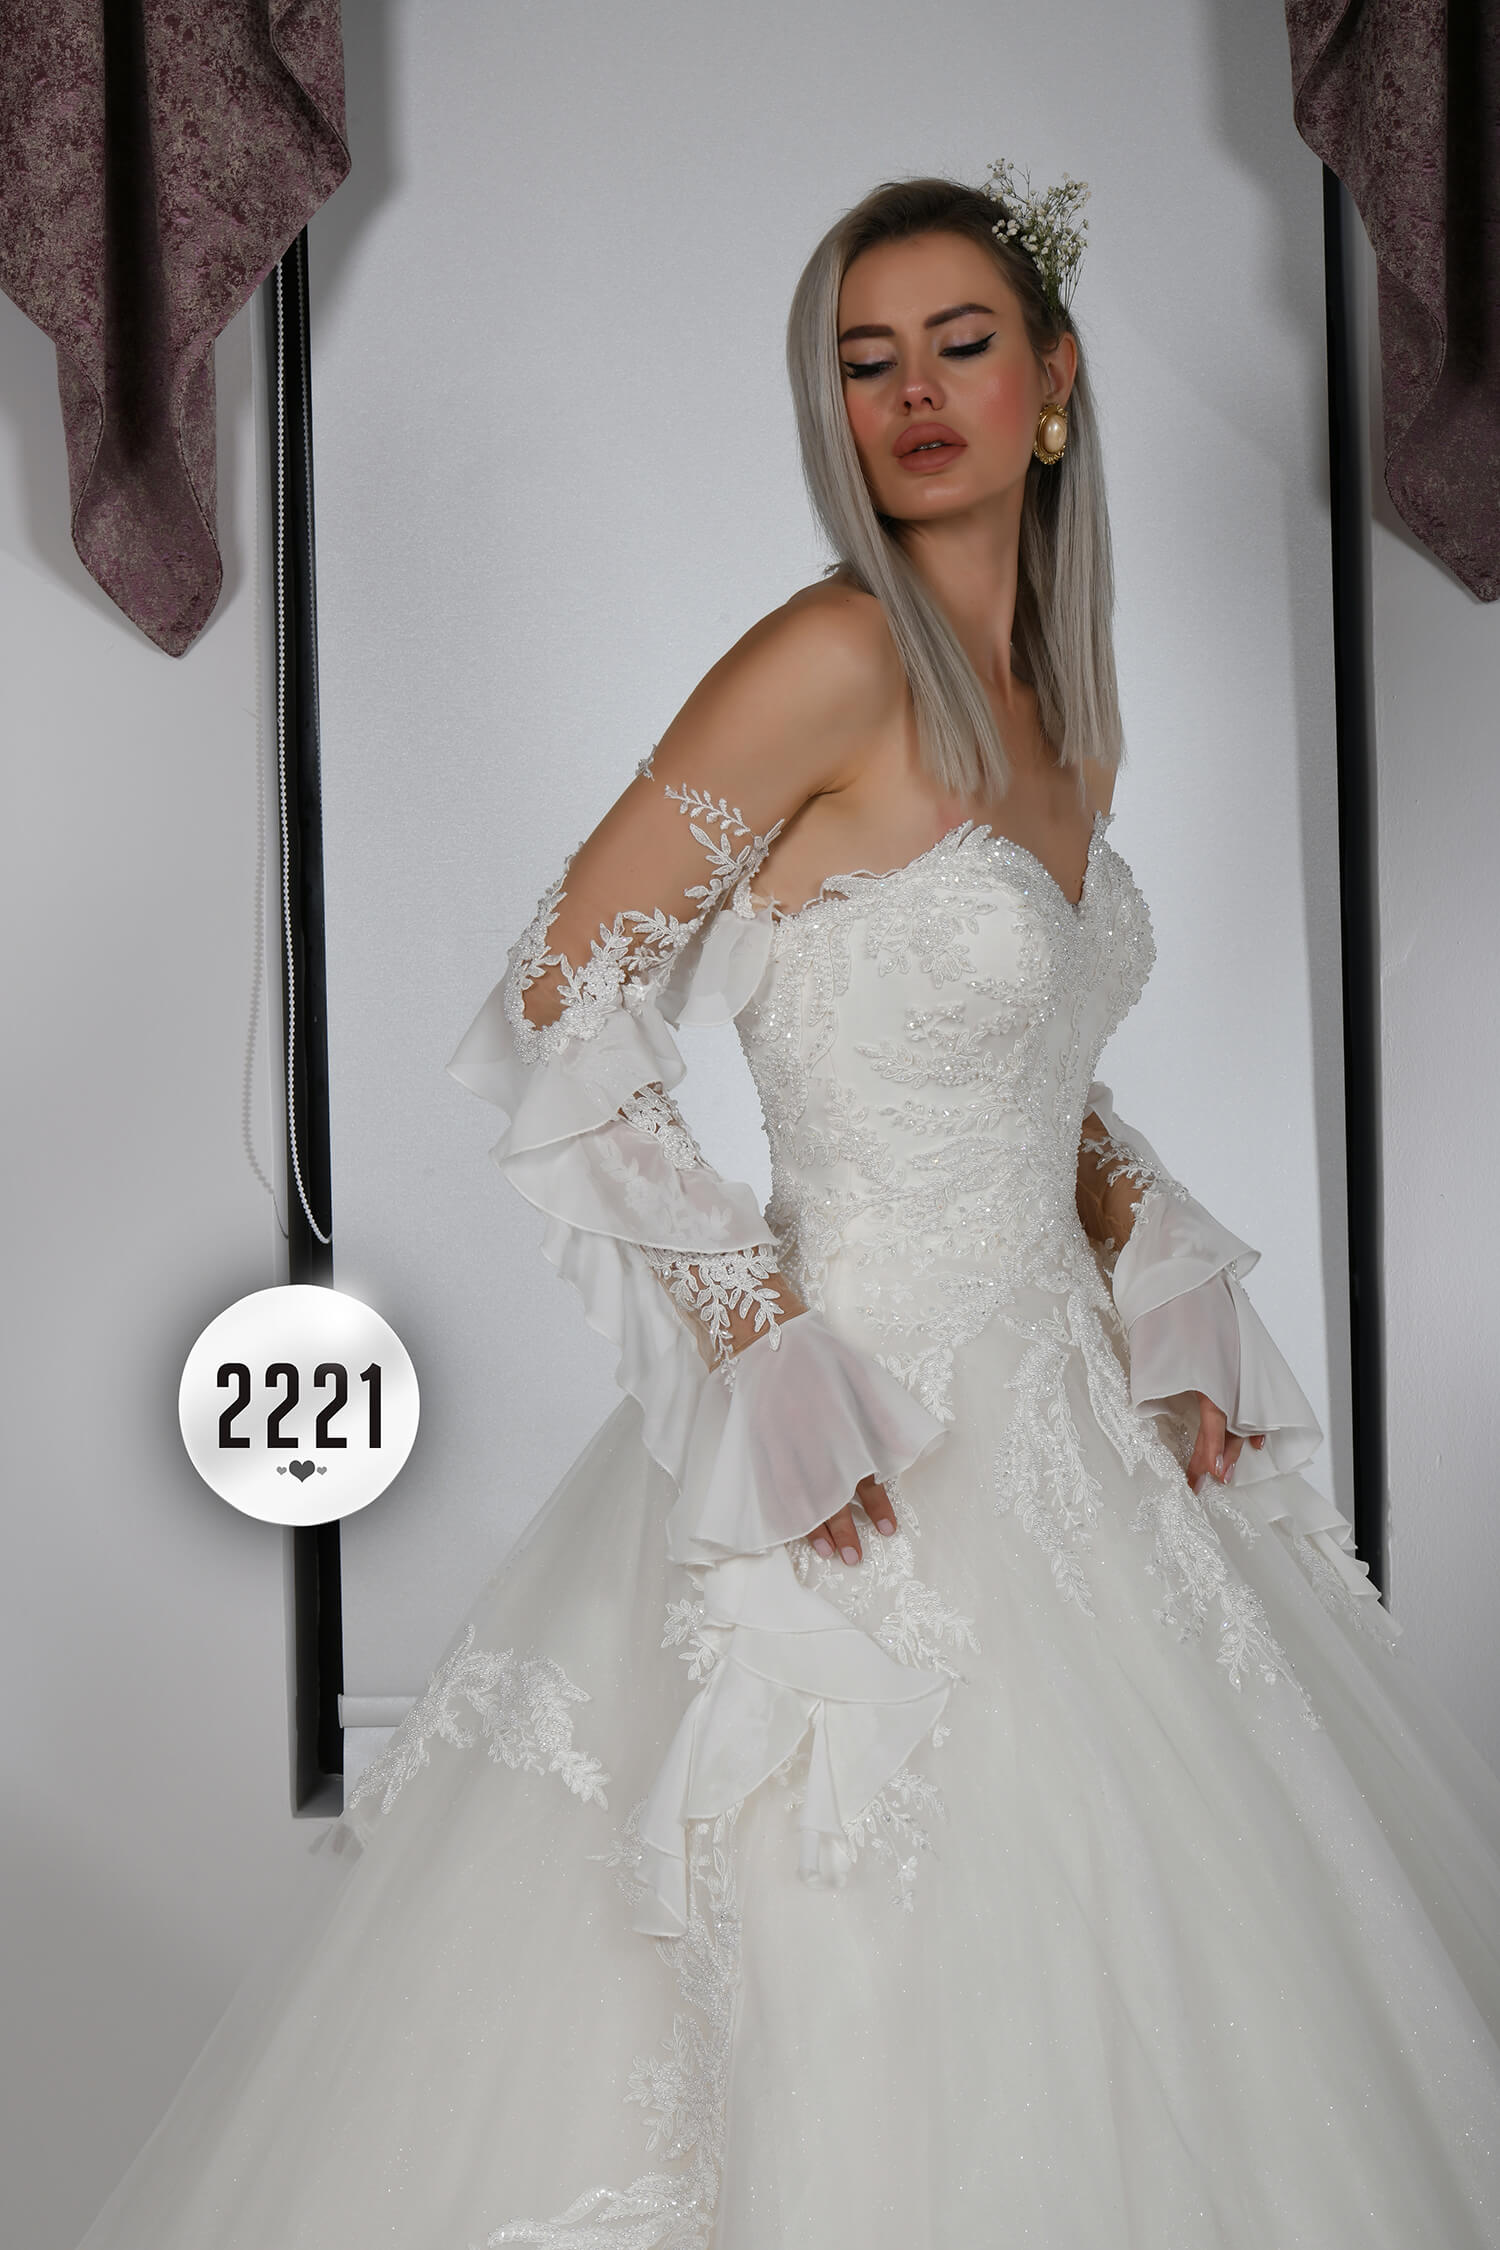 Glittering Helen Wedding Dress with Illusion Neckline Back Window Otrish Detail.